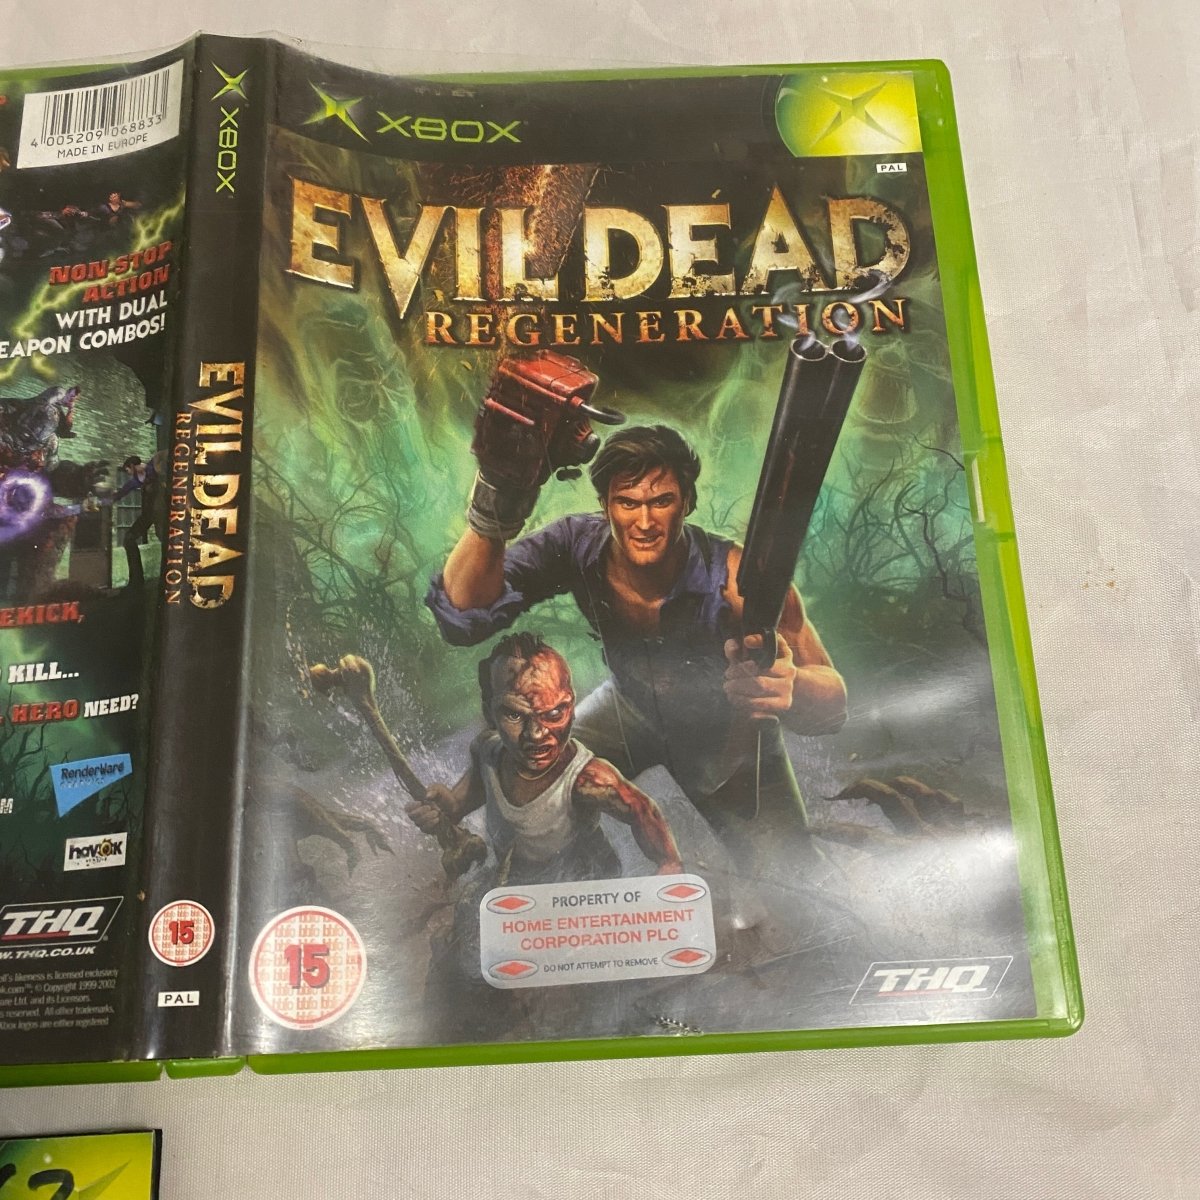 Evil Dead: Regeneration - Traduzido para PT-BR (PS2, PC e Xbox) + Download  do Patch 